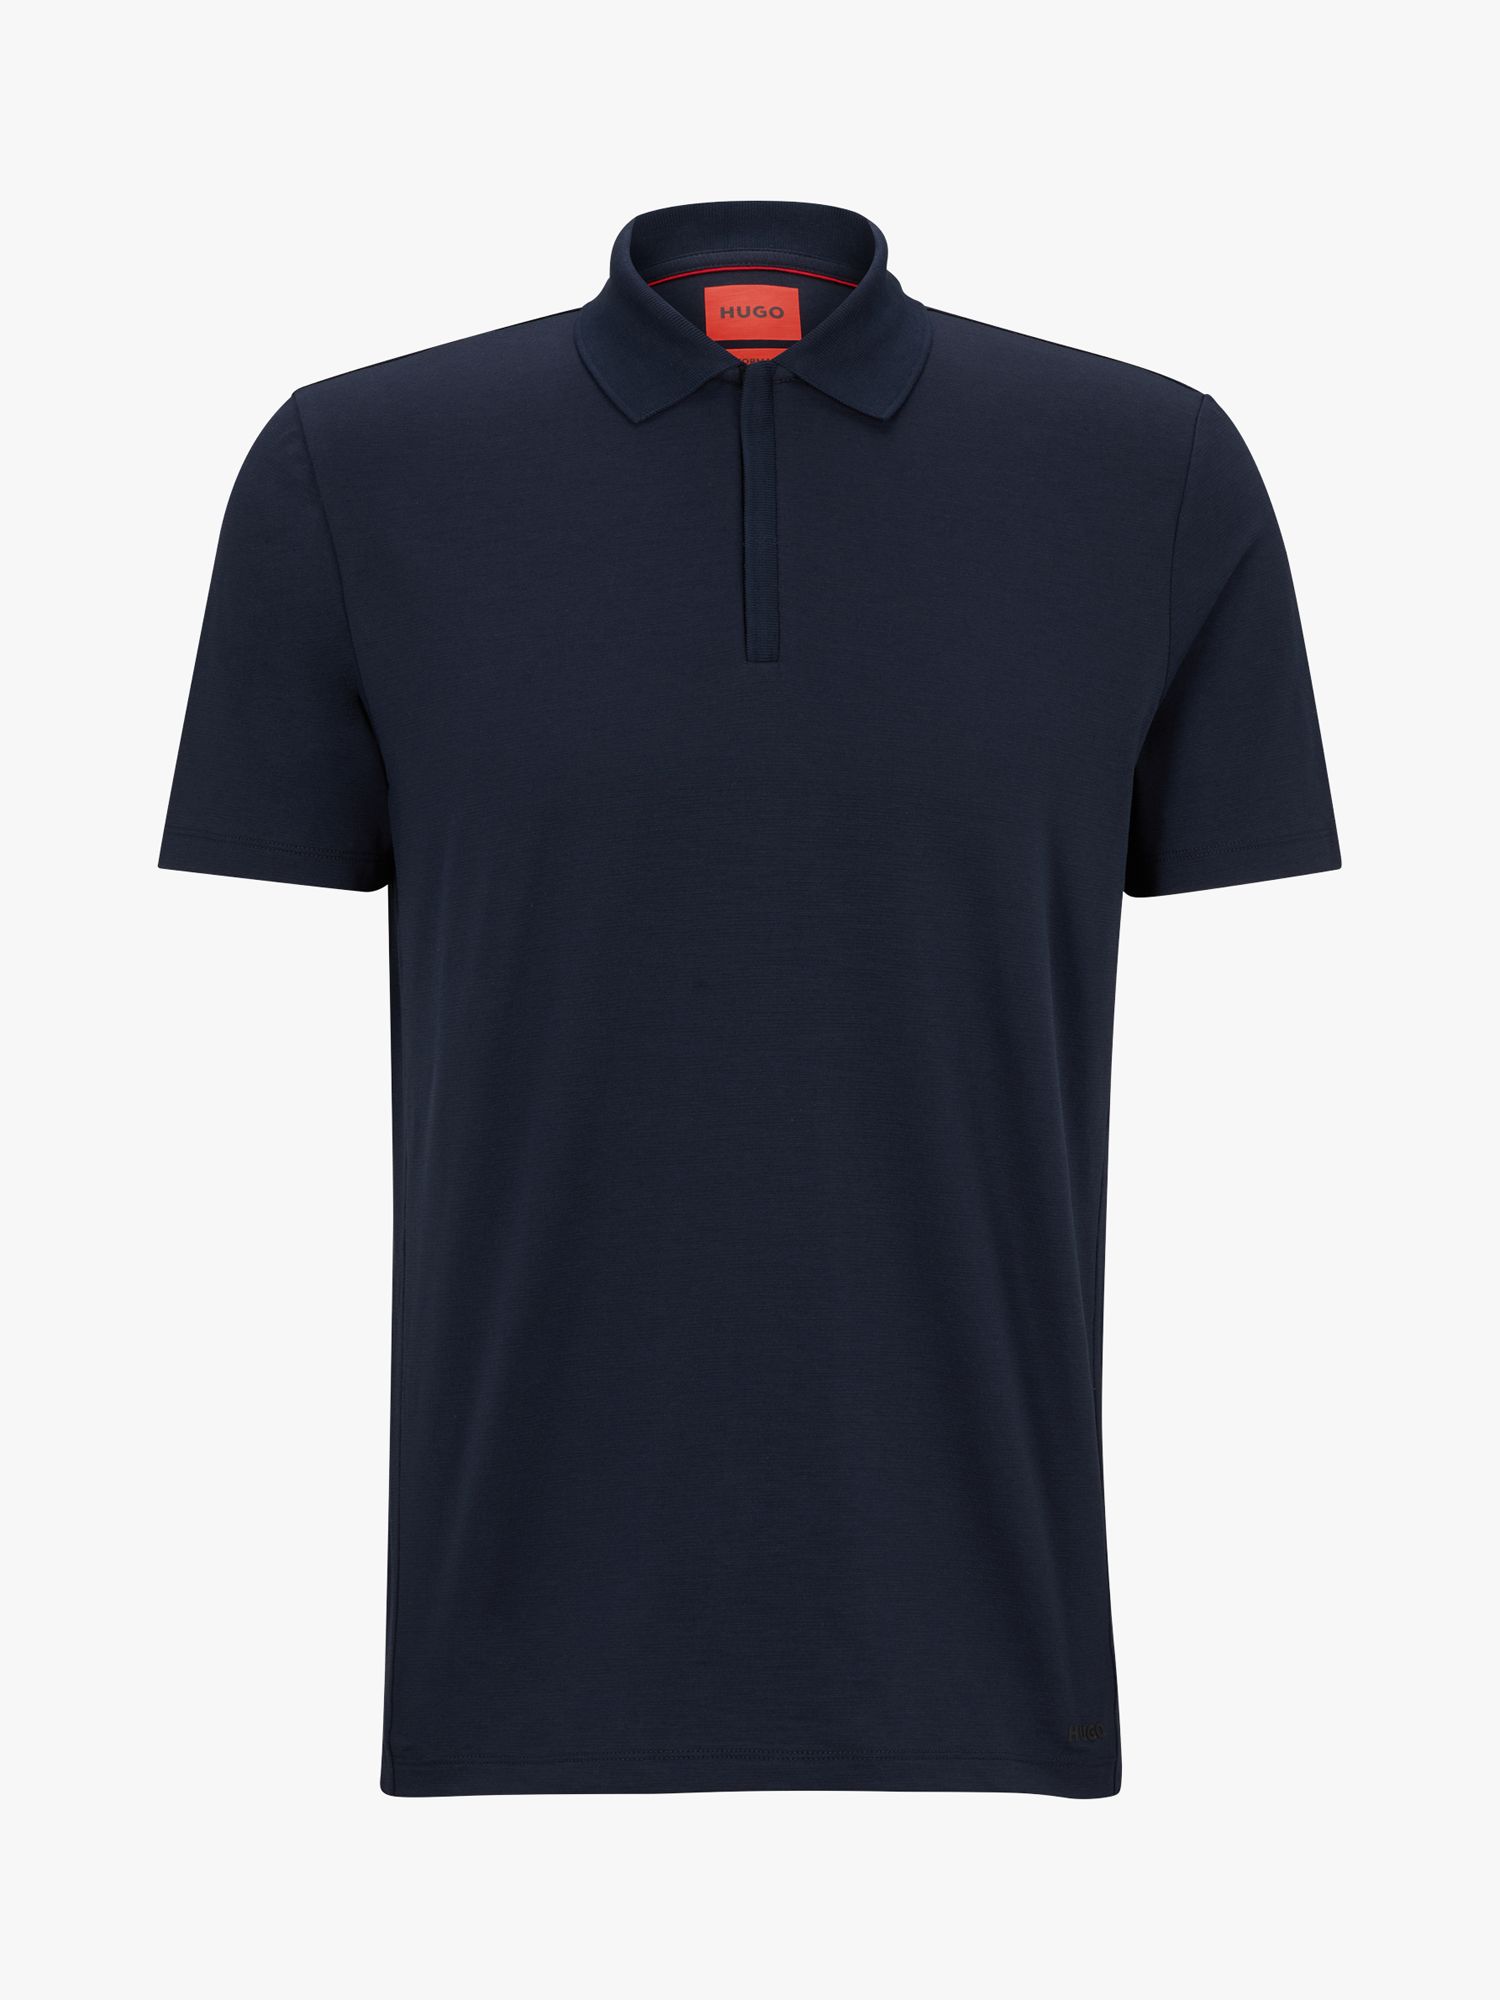 HUGO Dekok Regular Fit Polo Shirt, Dark Blue at John Lewis & Partners